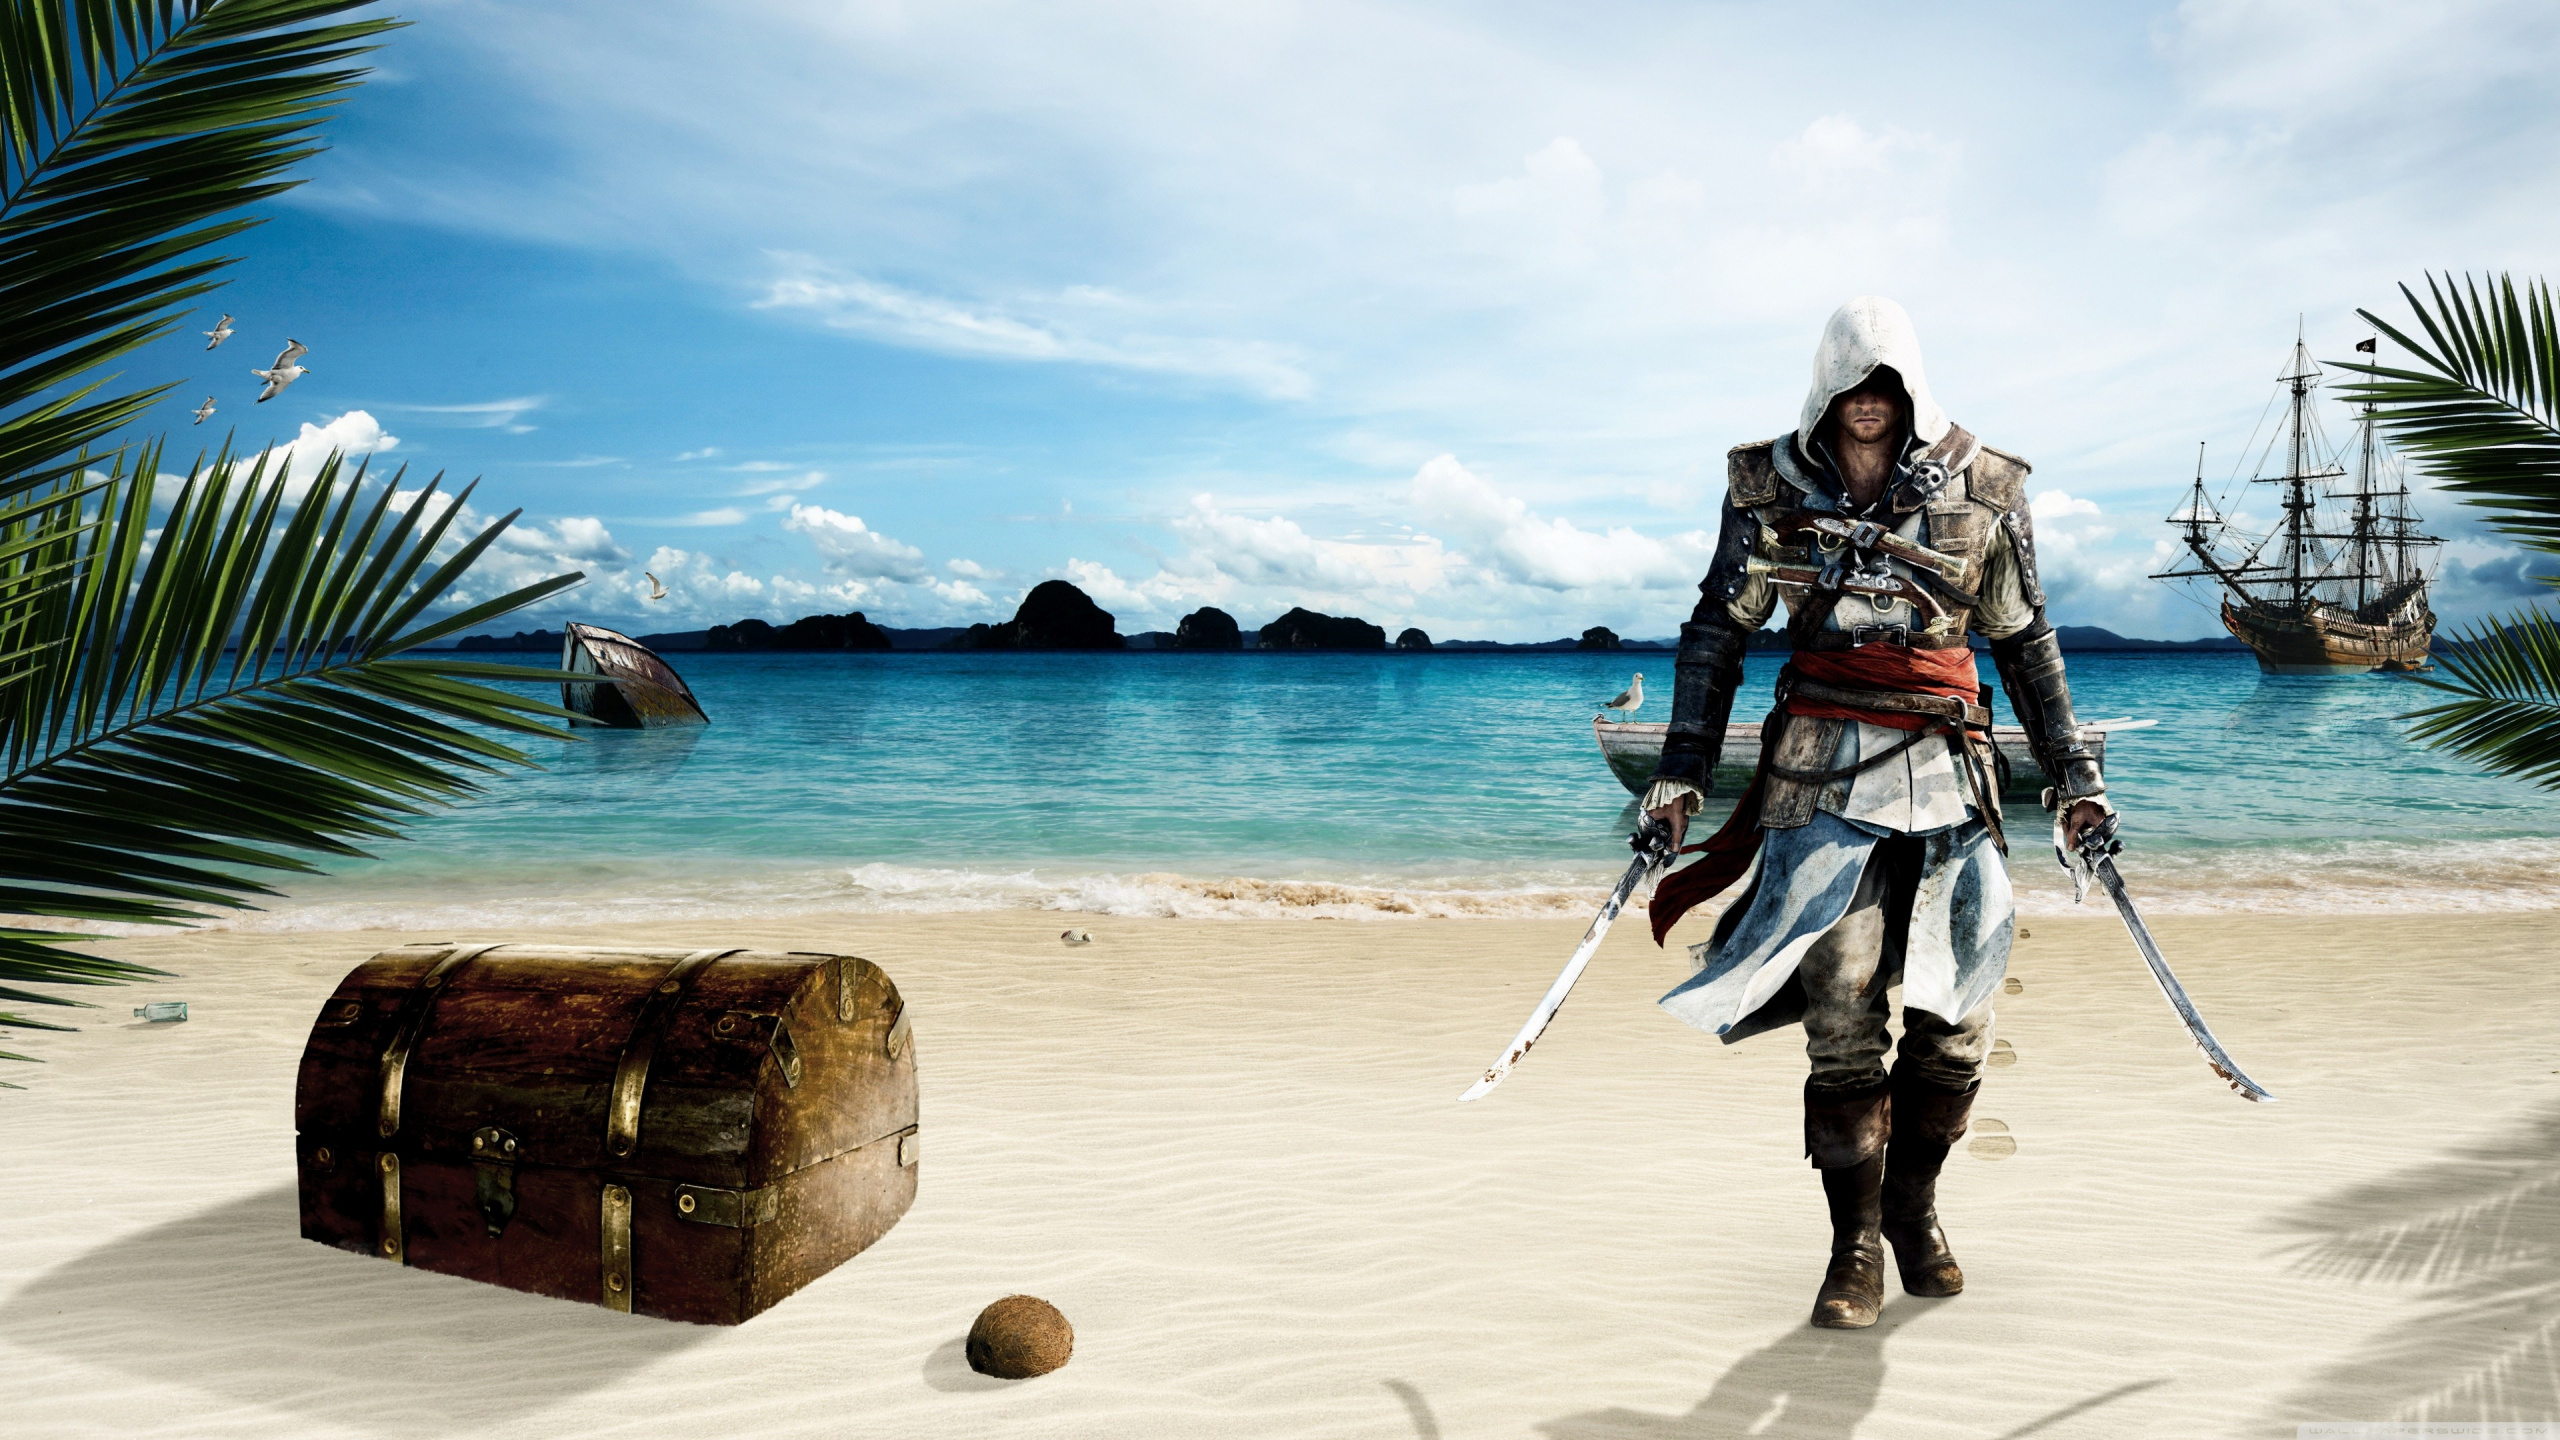 Tourismus, Meer, Urlaub, Reise, Assassins Creed III. Wallpaper in 2560x1440 Resolution